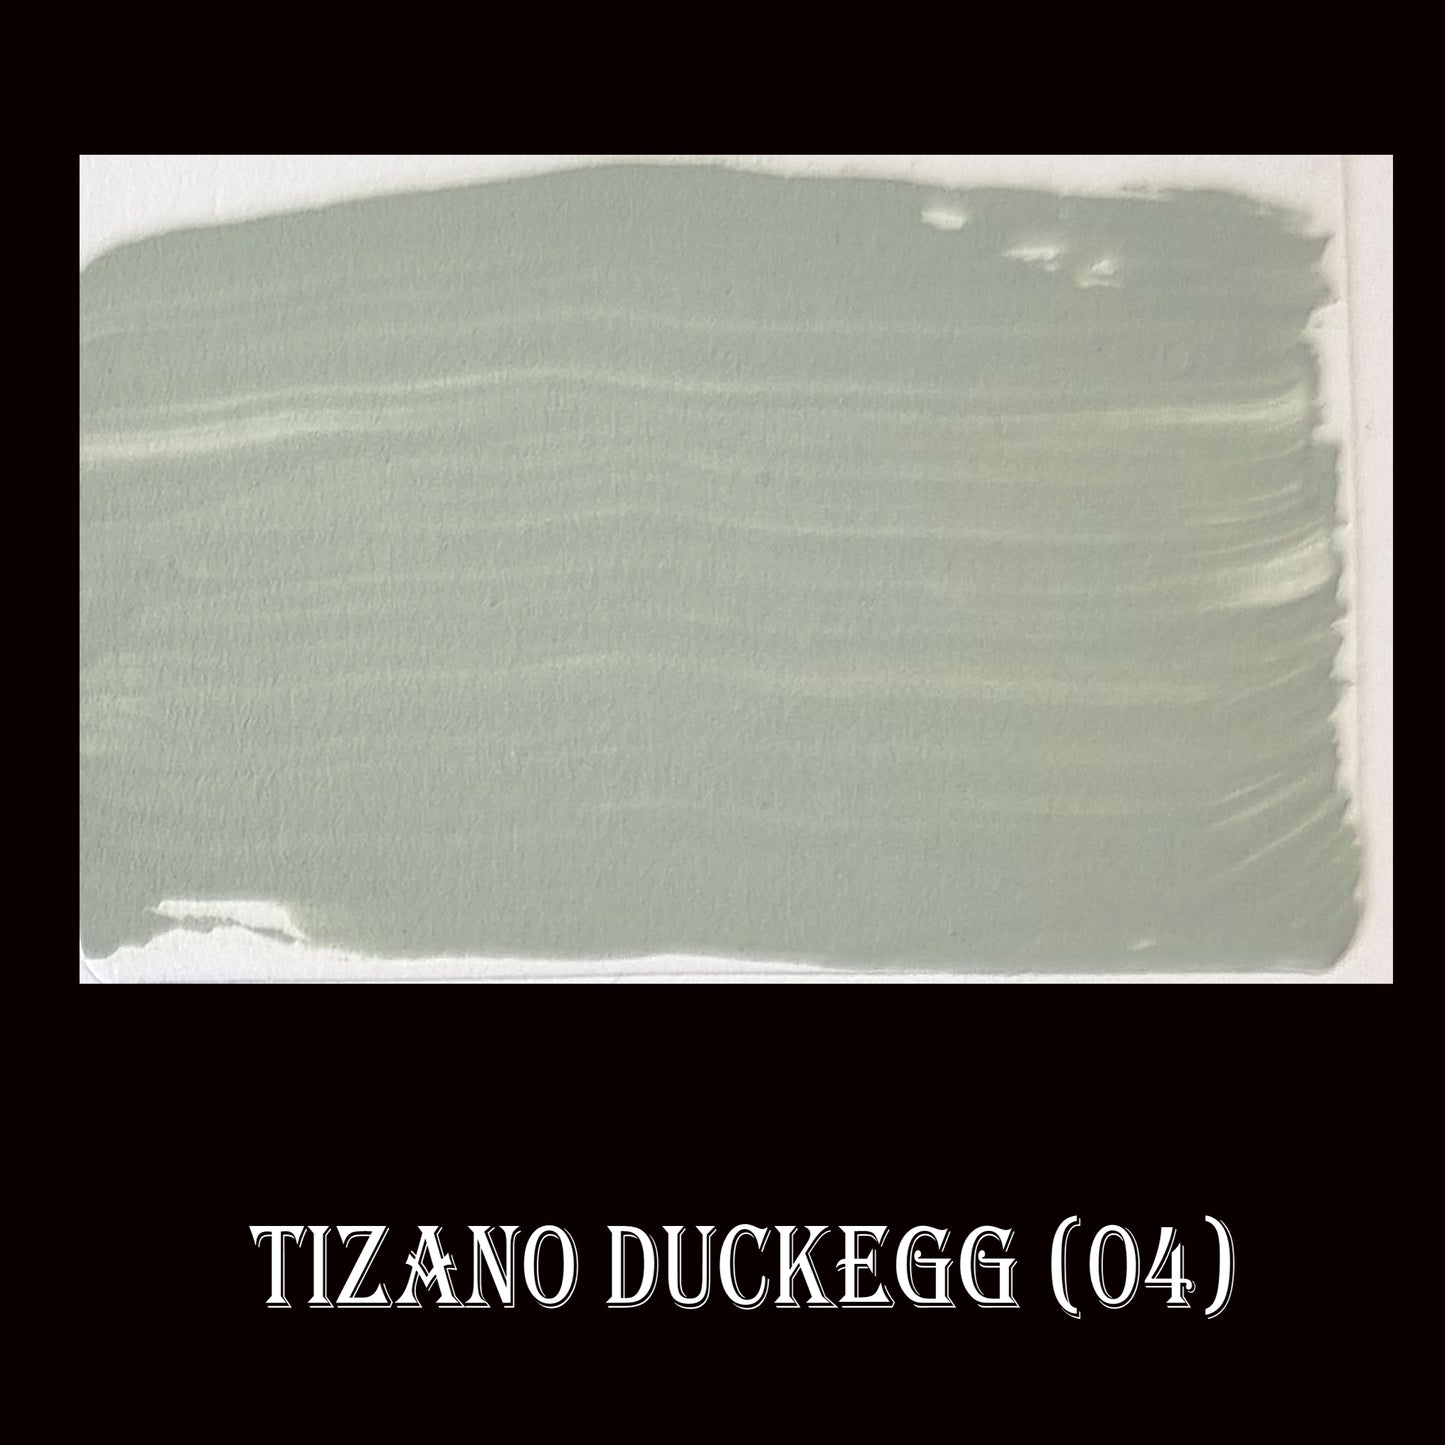 04 Chalky Finish Paint Tizano Duck Egg - Da Vinci Chalk Paint & Rustic home decor